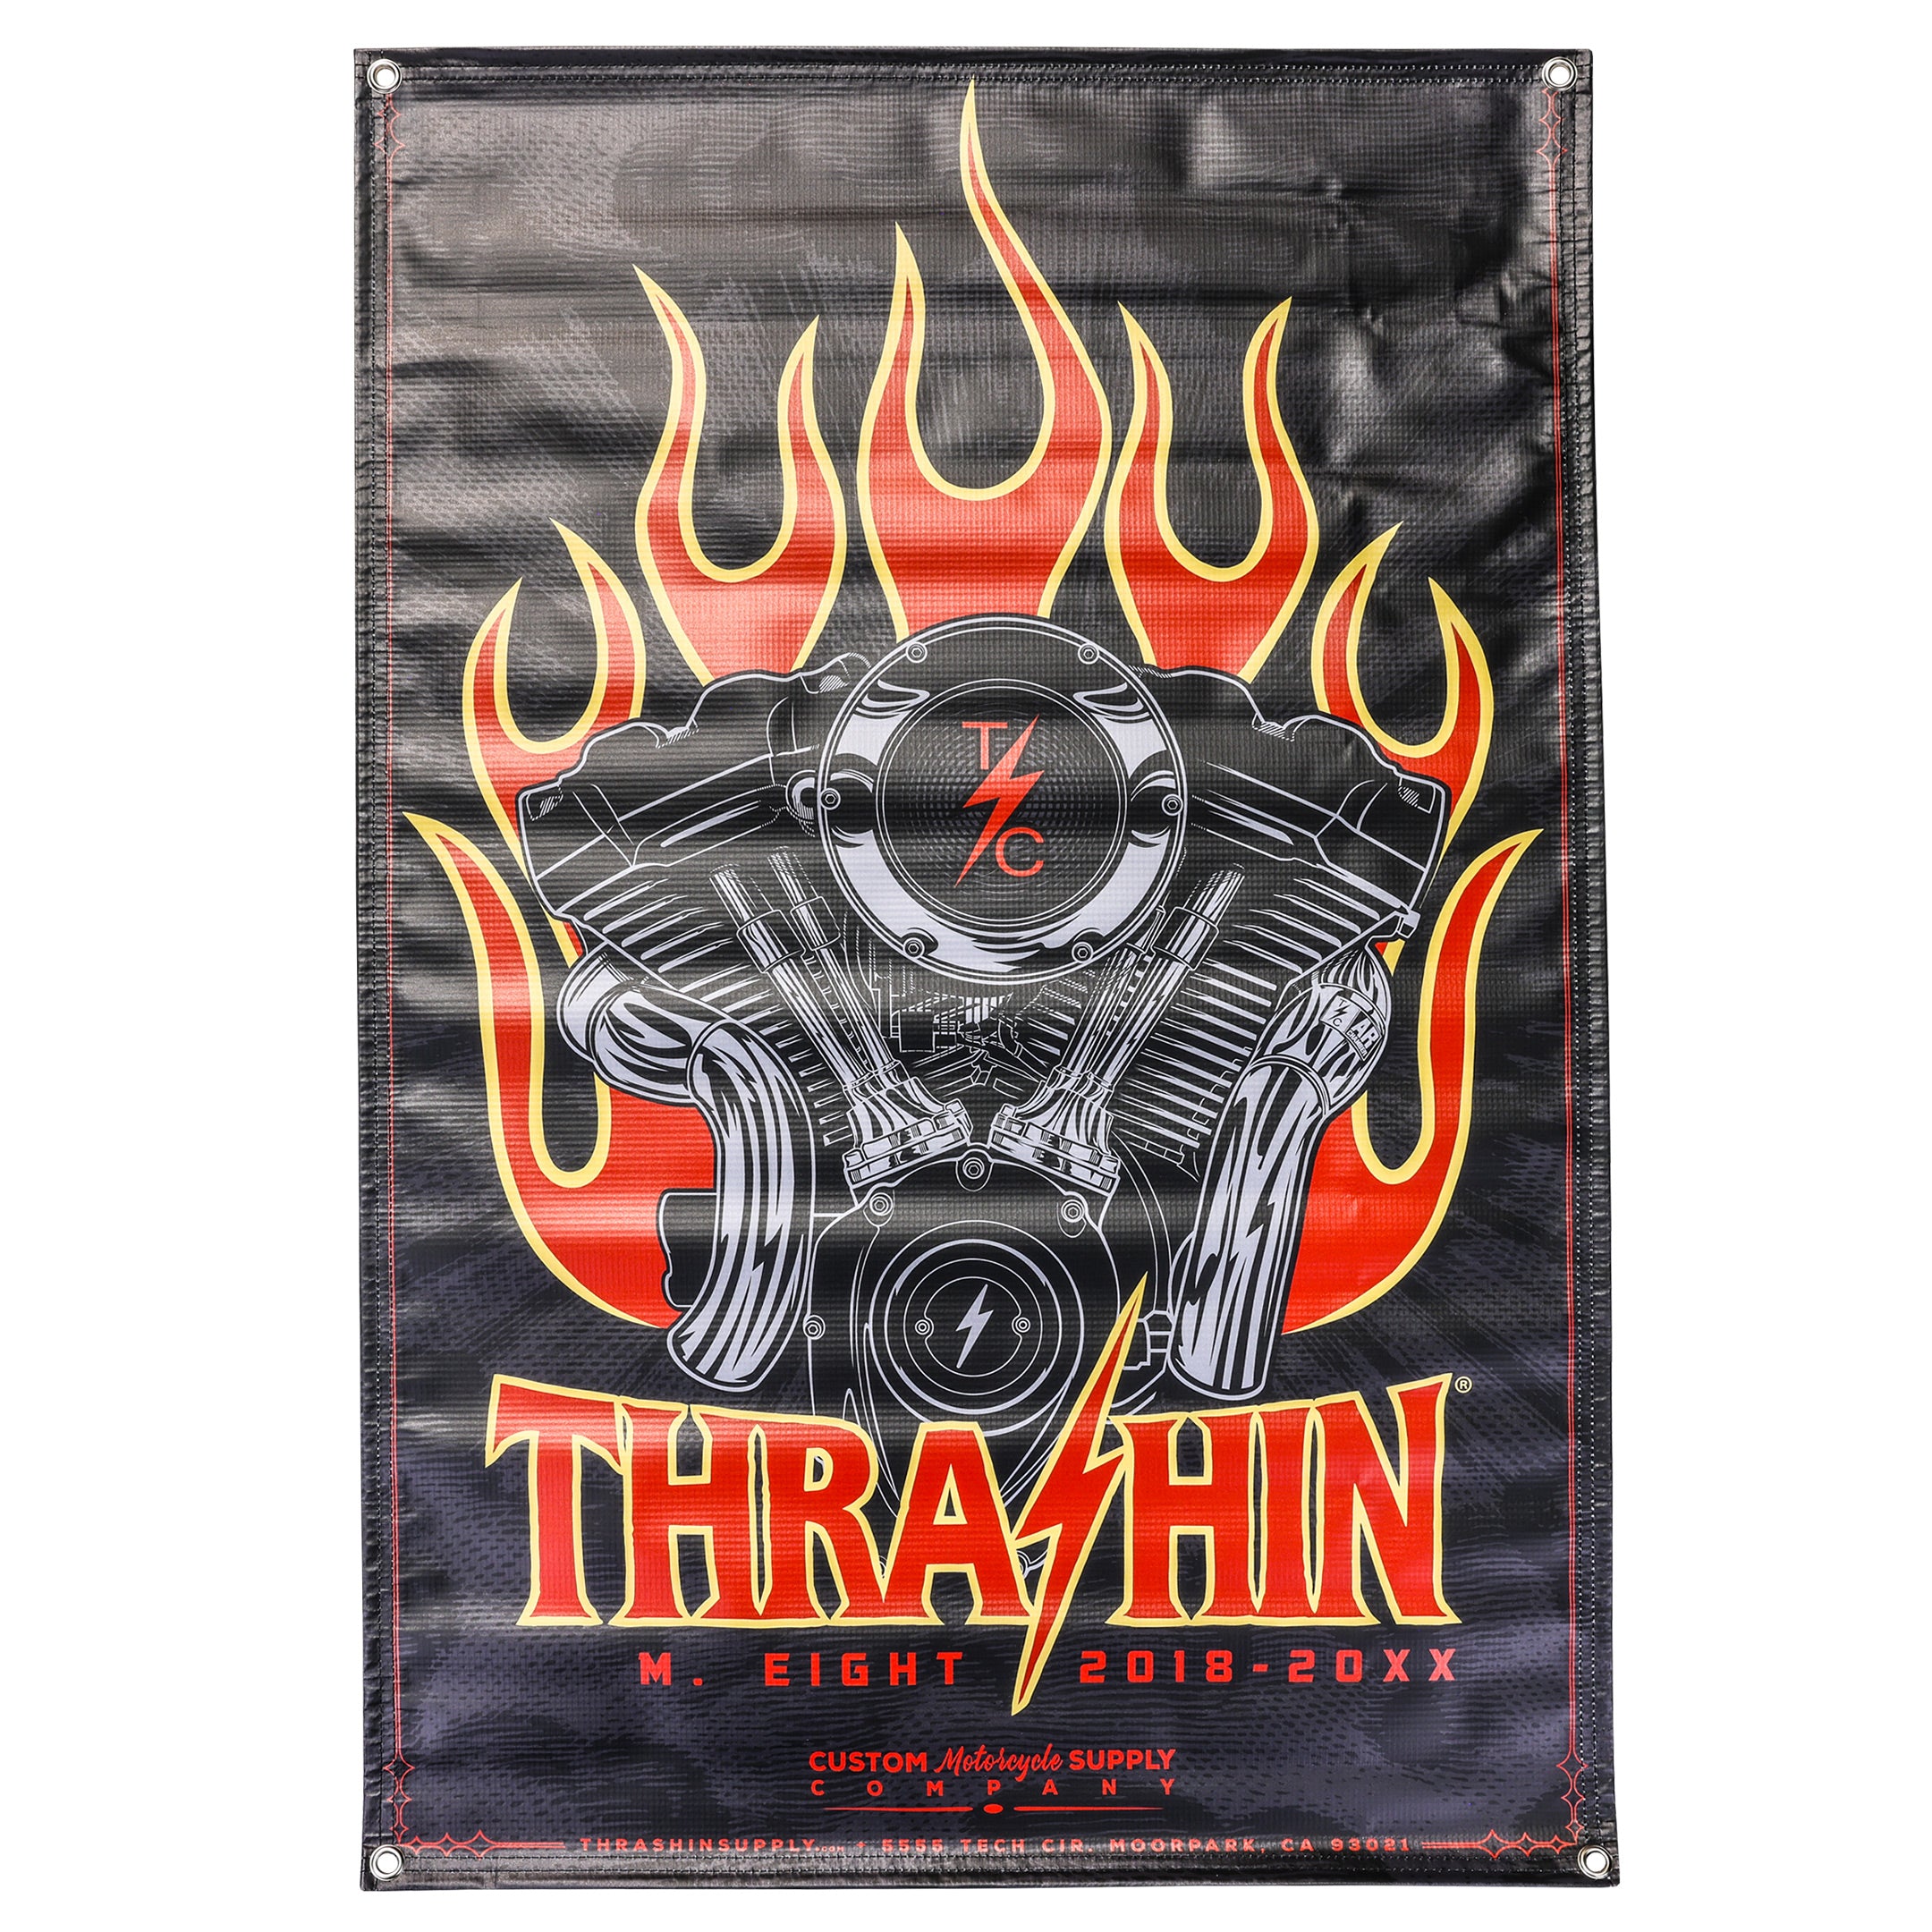 Thrashin Supply